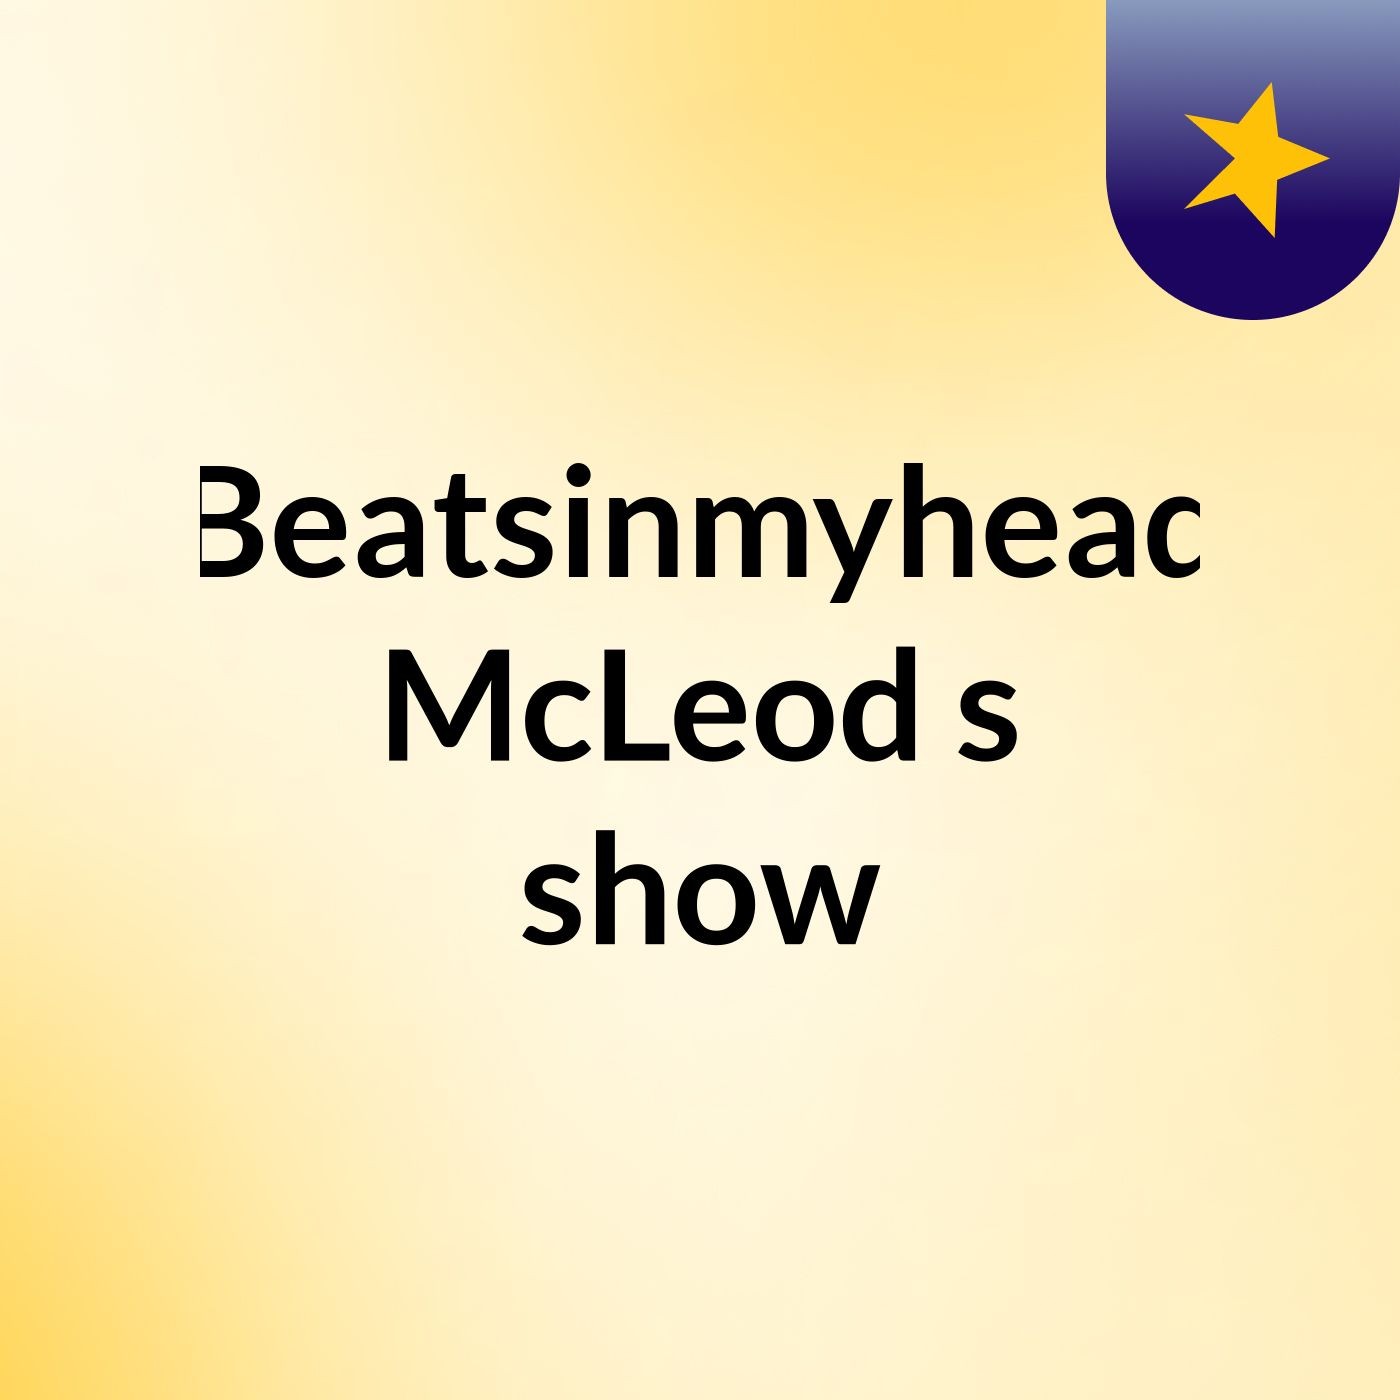 Beatsinmyhead McLeod's show